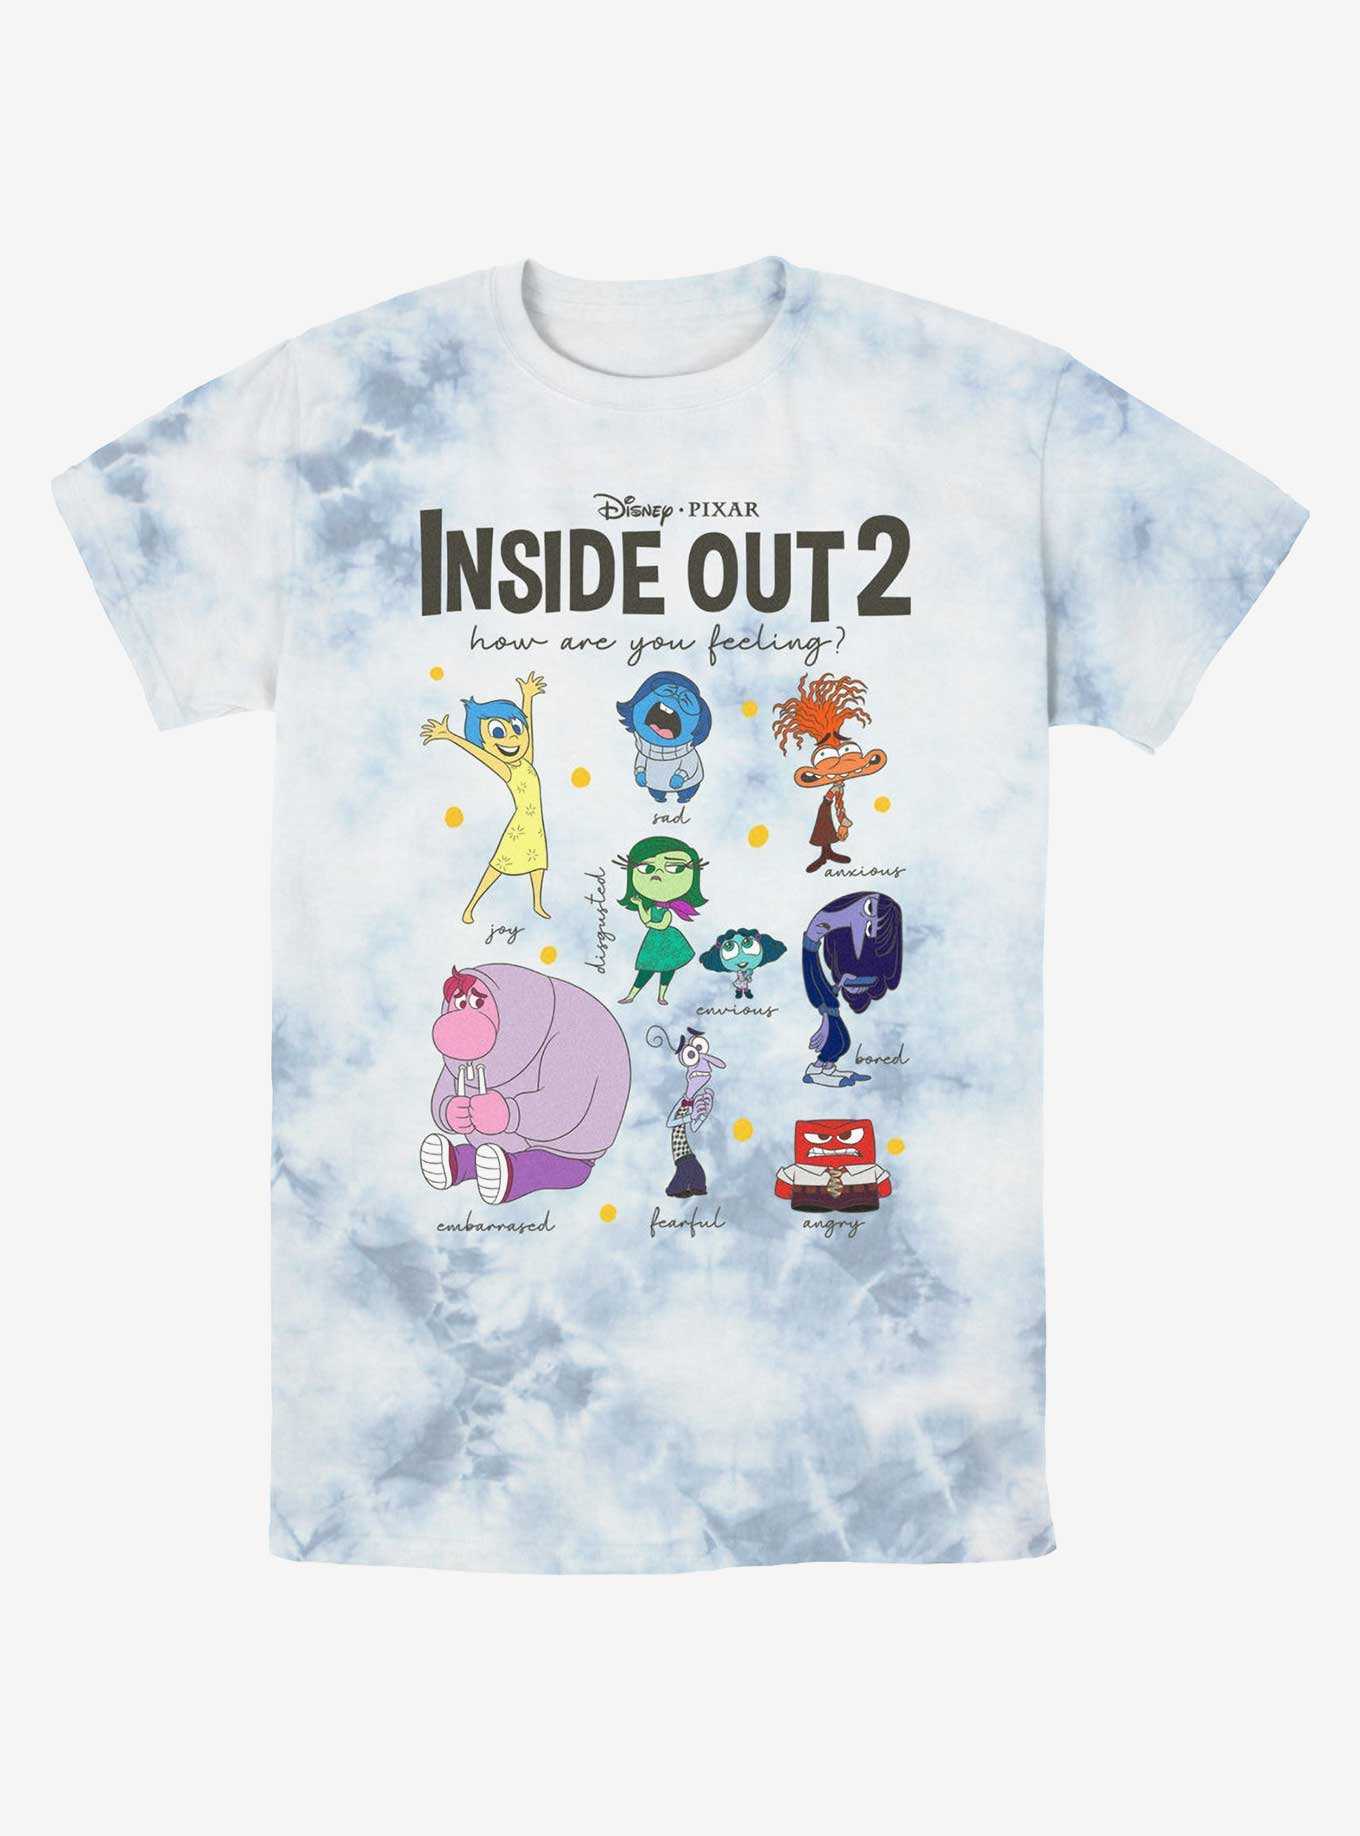 Disney Pixar Inside Out 2 Textbook Of Emotions Tie-Dye T-Shirt, , hi-res